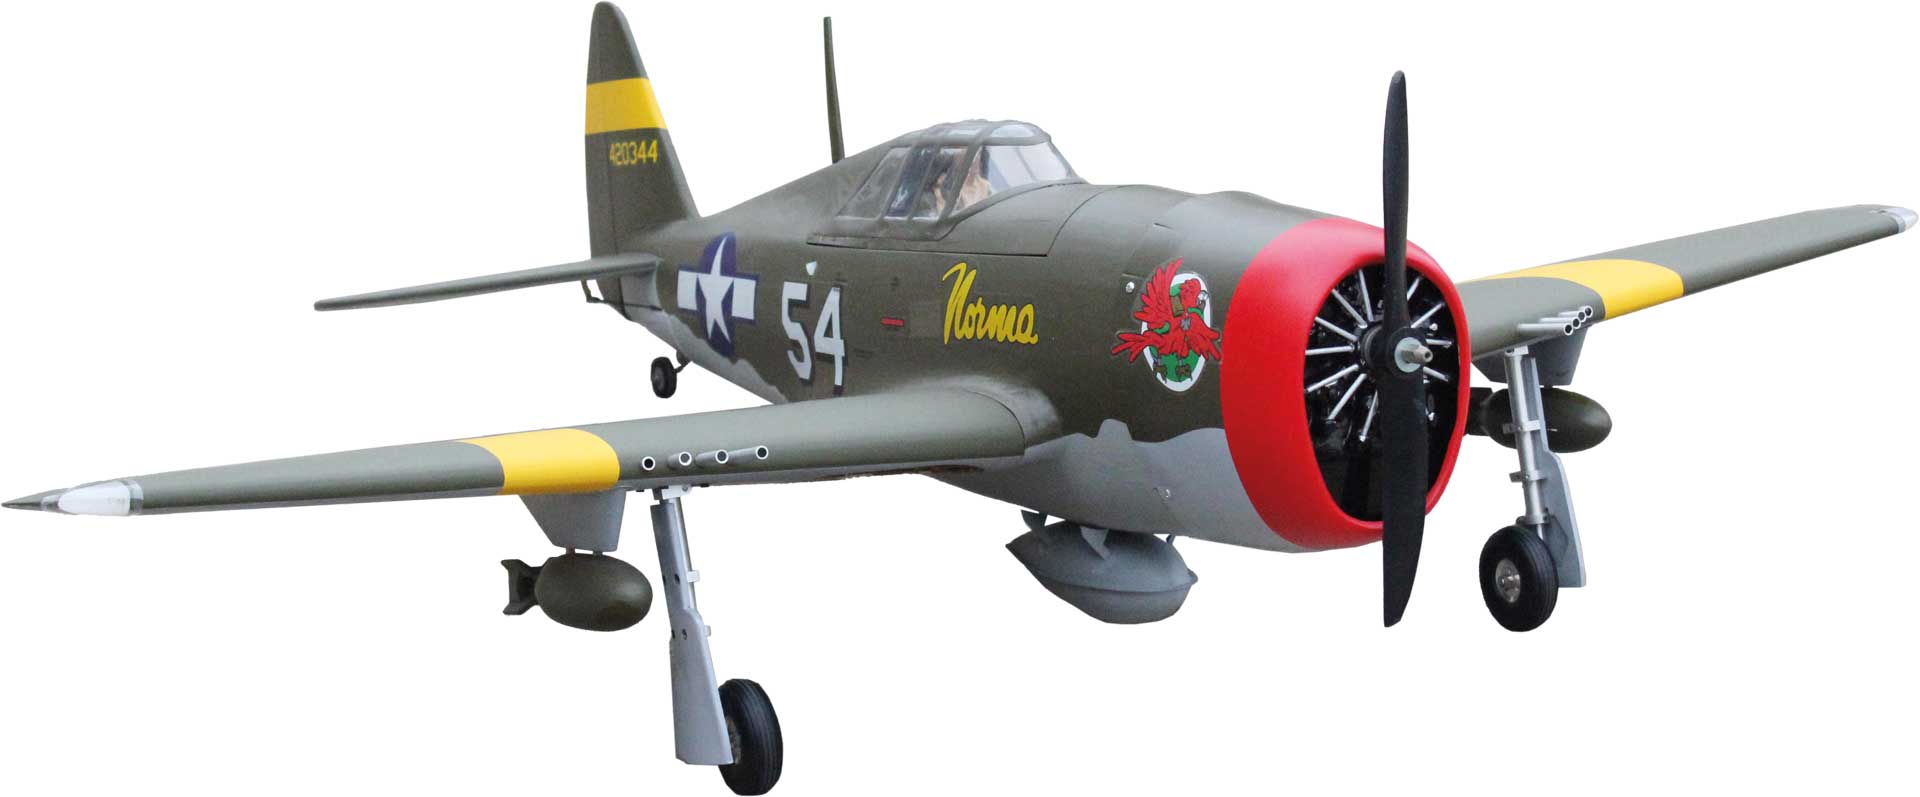 Seagull Models ( SG-Models ) P-47D Little Bunny MK-II 10cc 55 SANS train de roulement rétractable ARF Warbird, mat